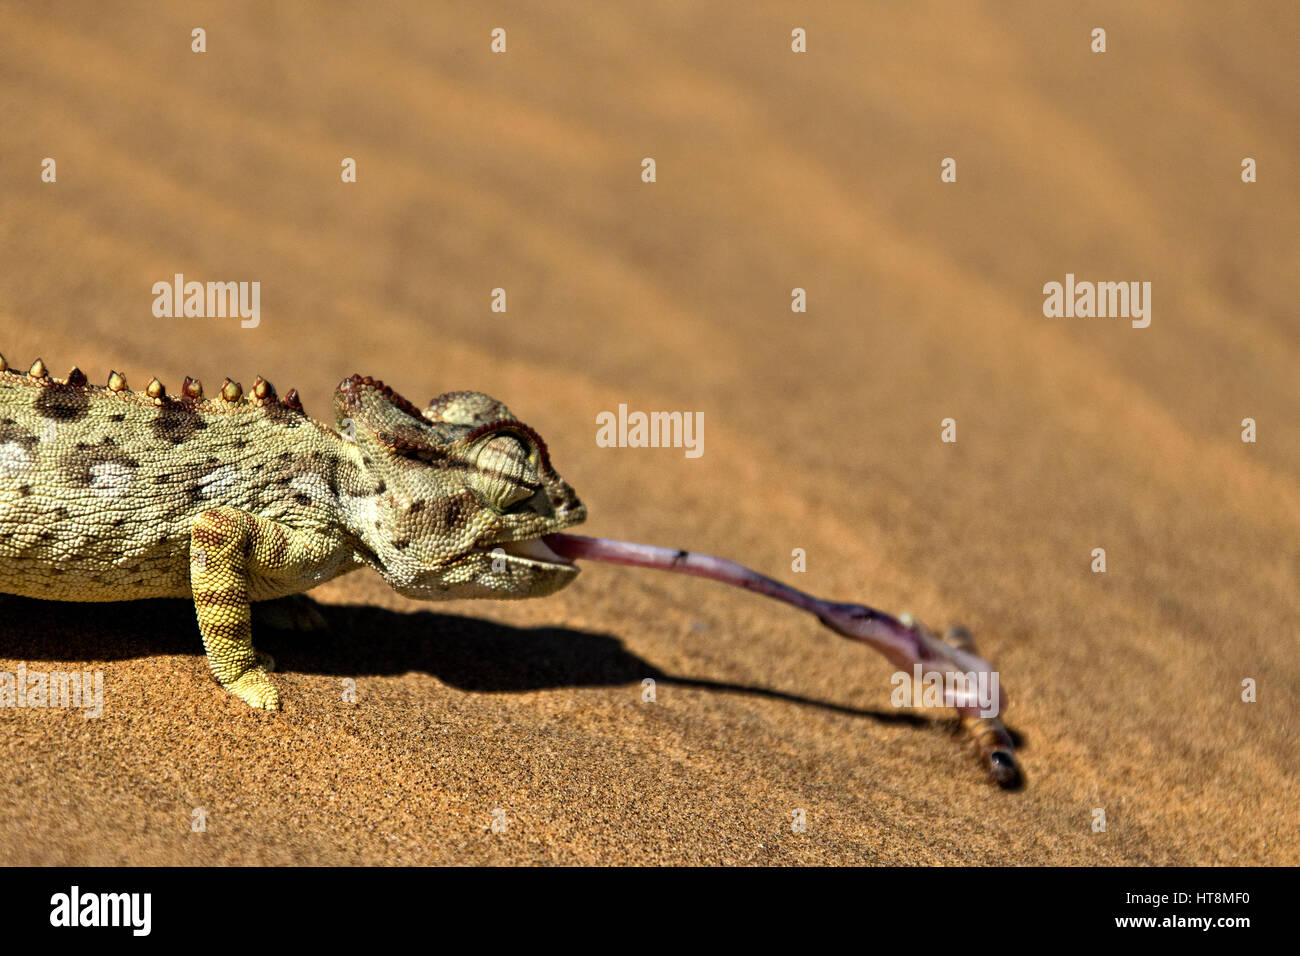 Chameleon Hunting the Namib attacking grub with long tongue Stock Photo